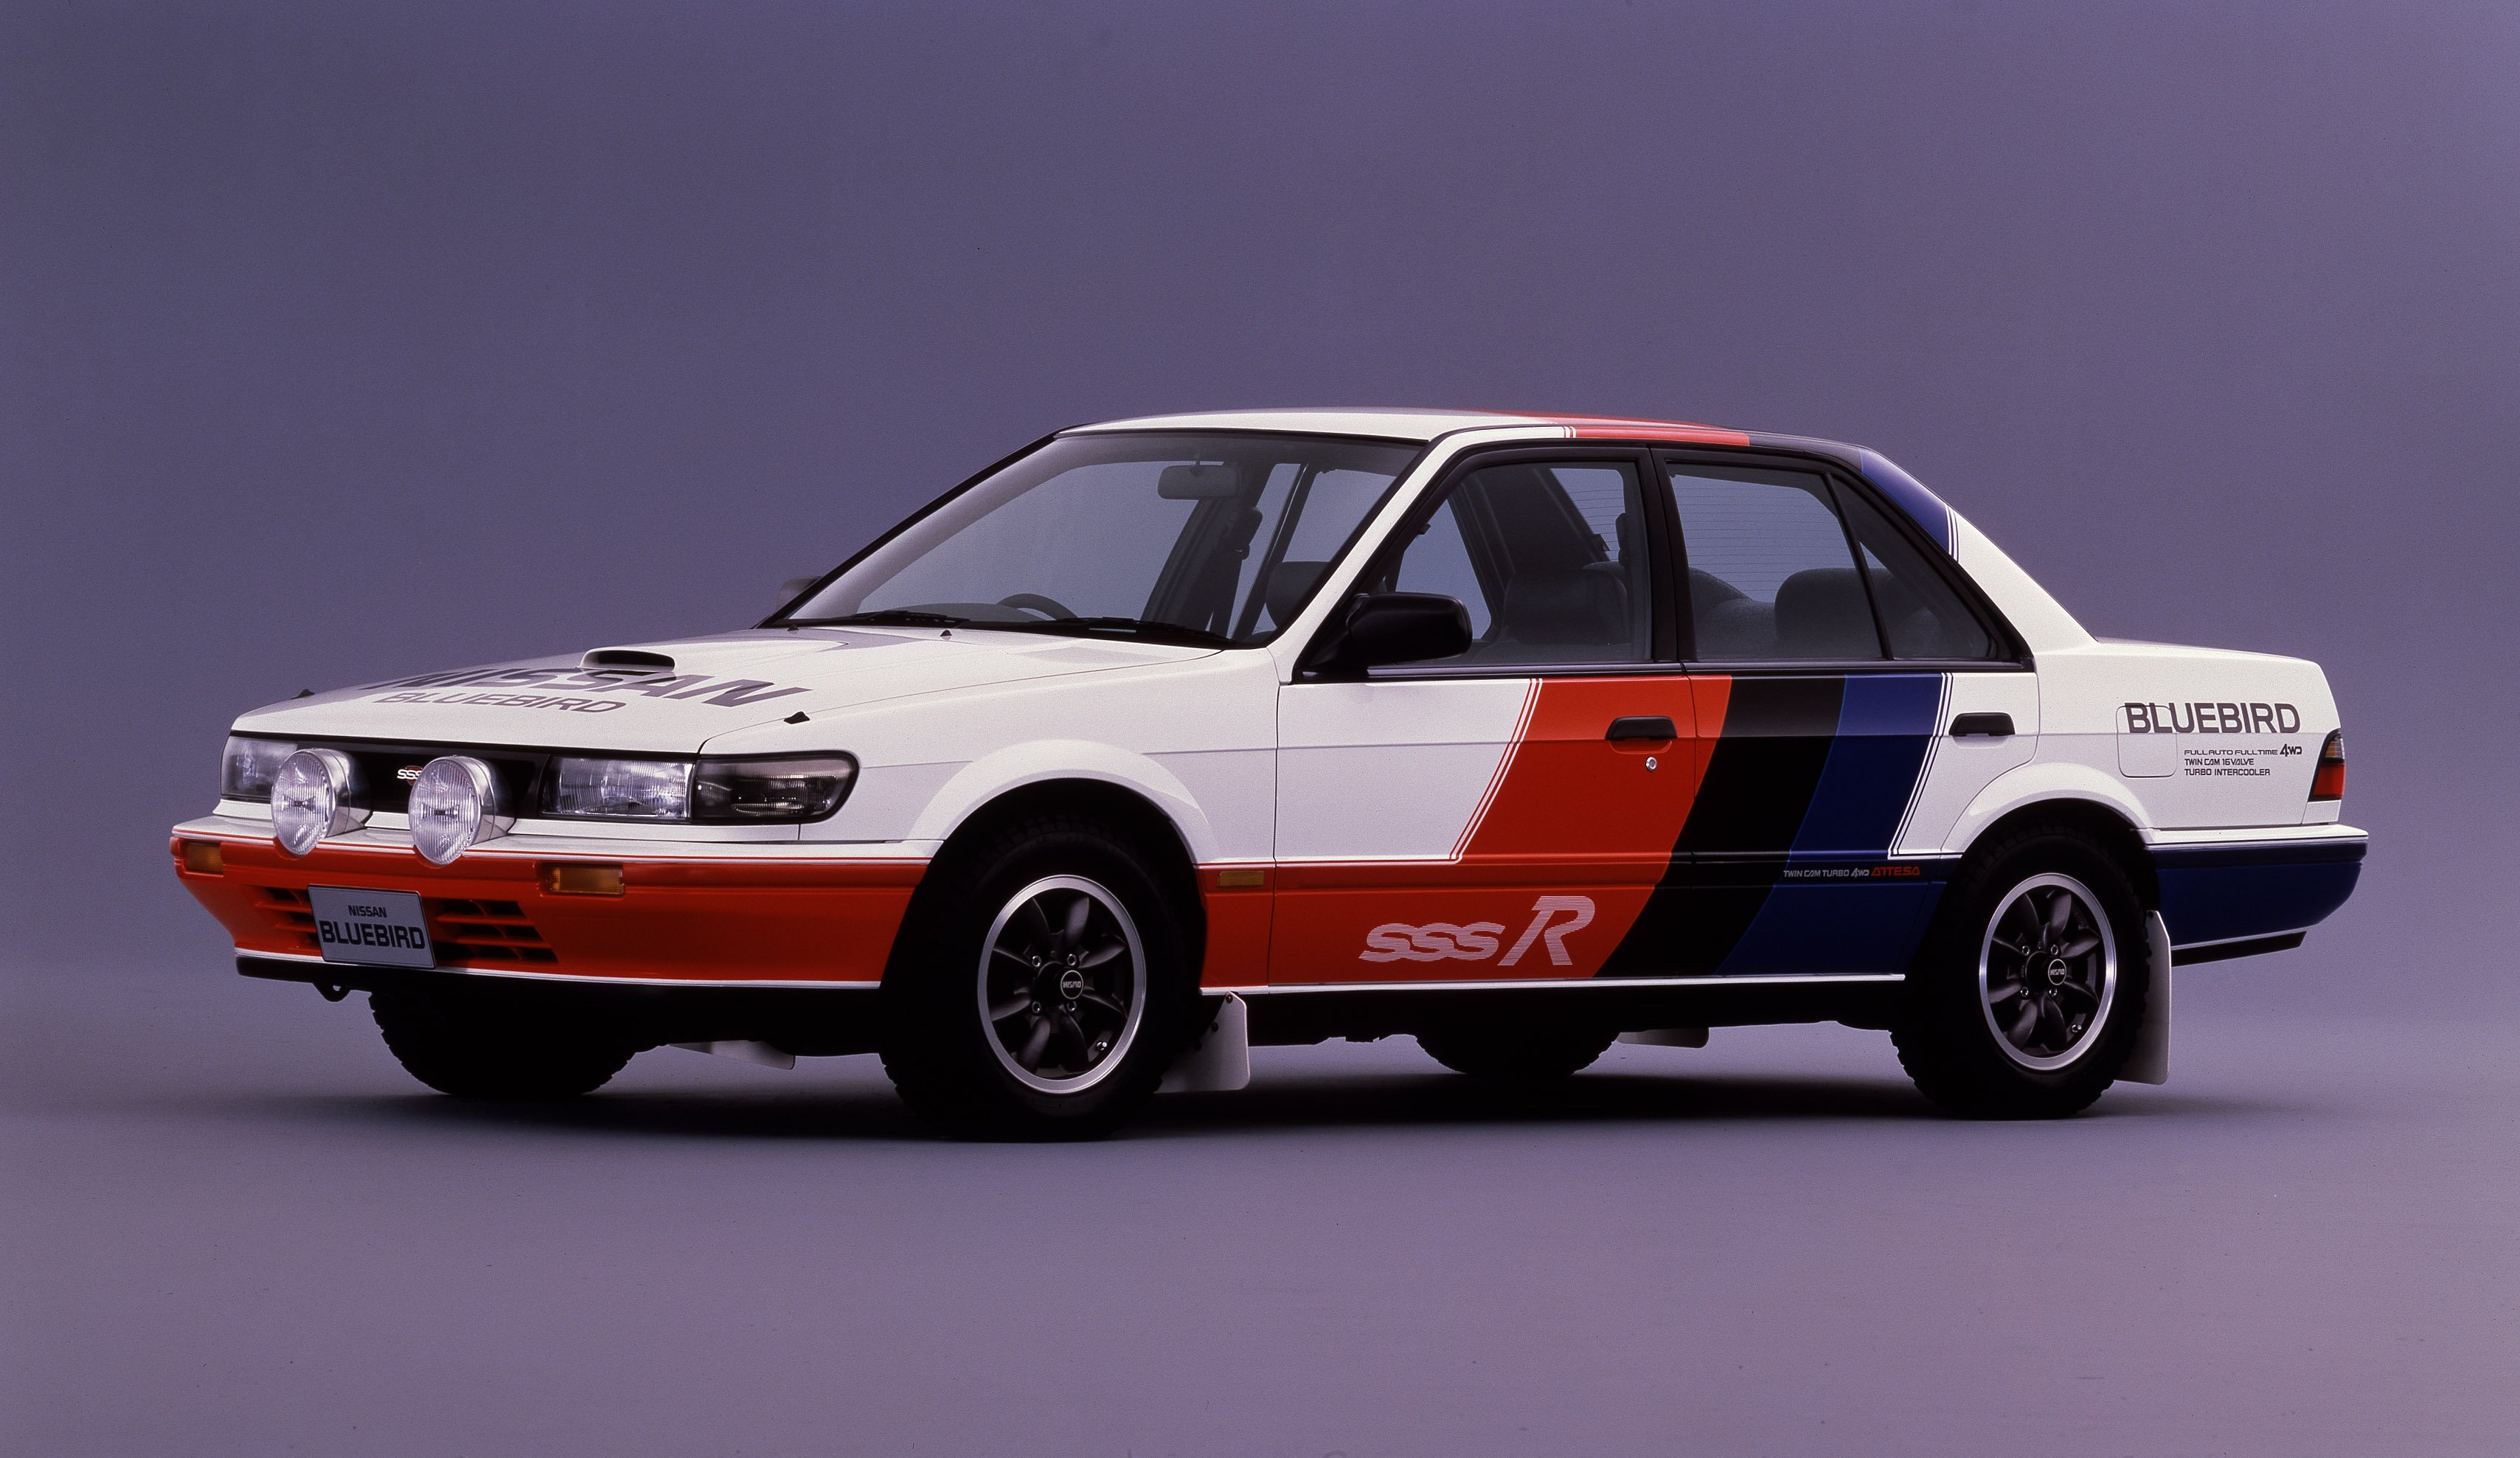 1987, Nismo, Nissan, Bluebird, Sss r, U12, Race, Racing Wallpaper